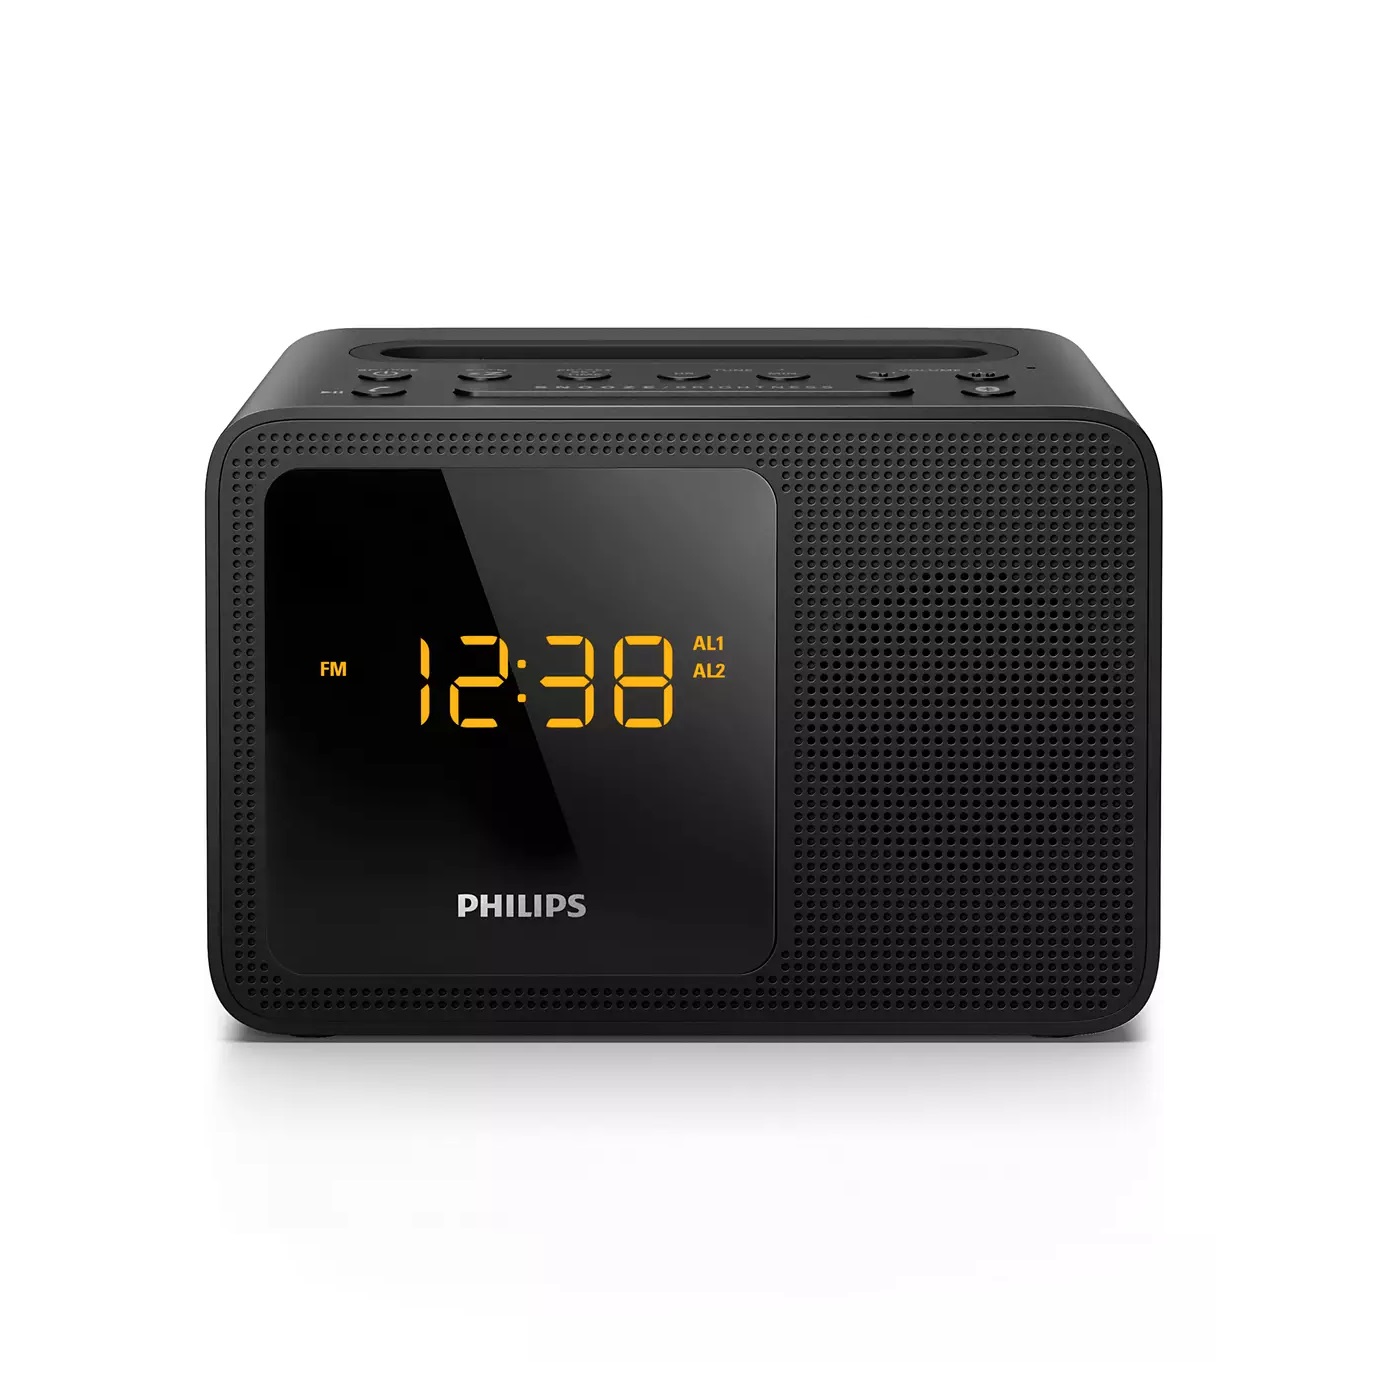  PHILIPS Reloj despertador con carga inalámbrica, radio